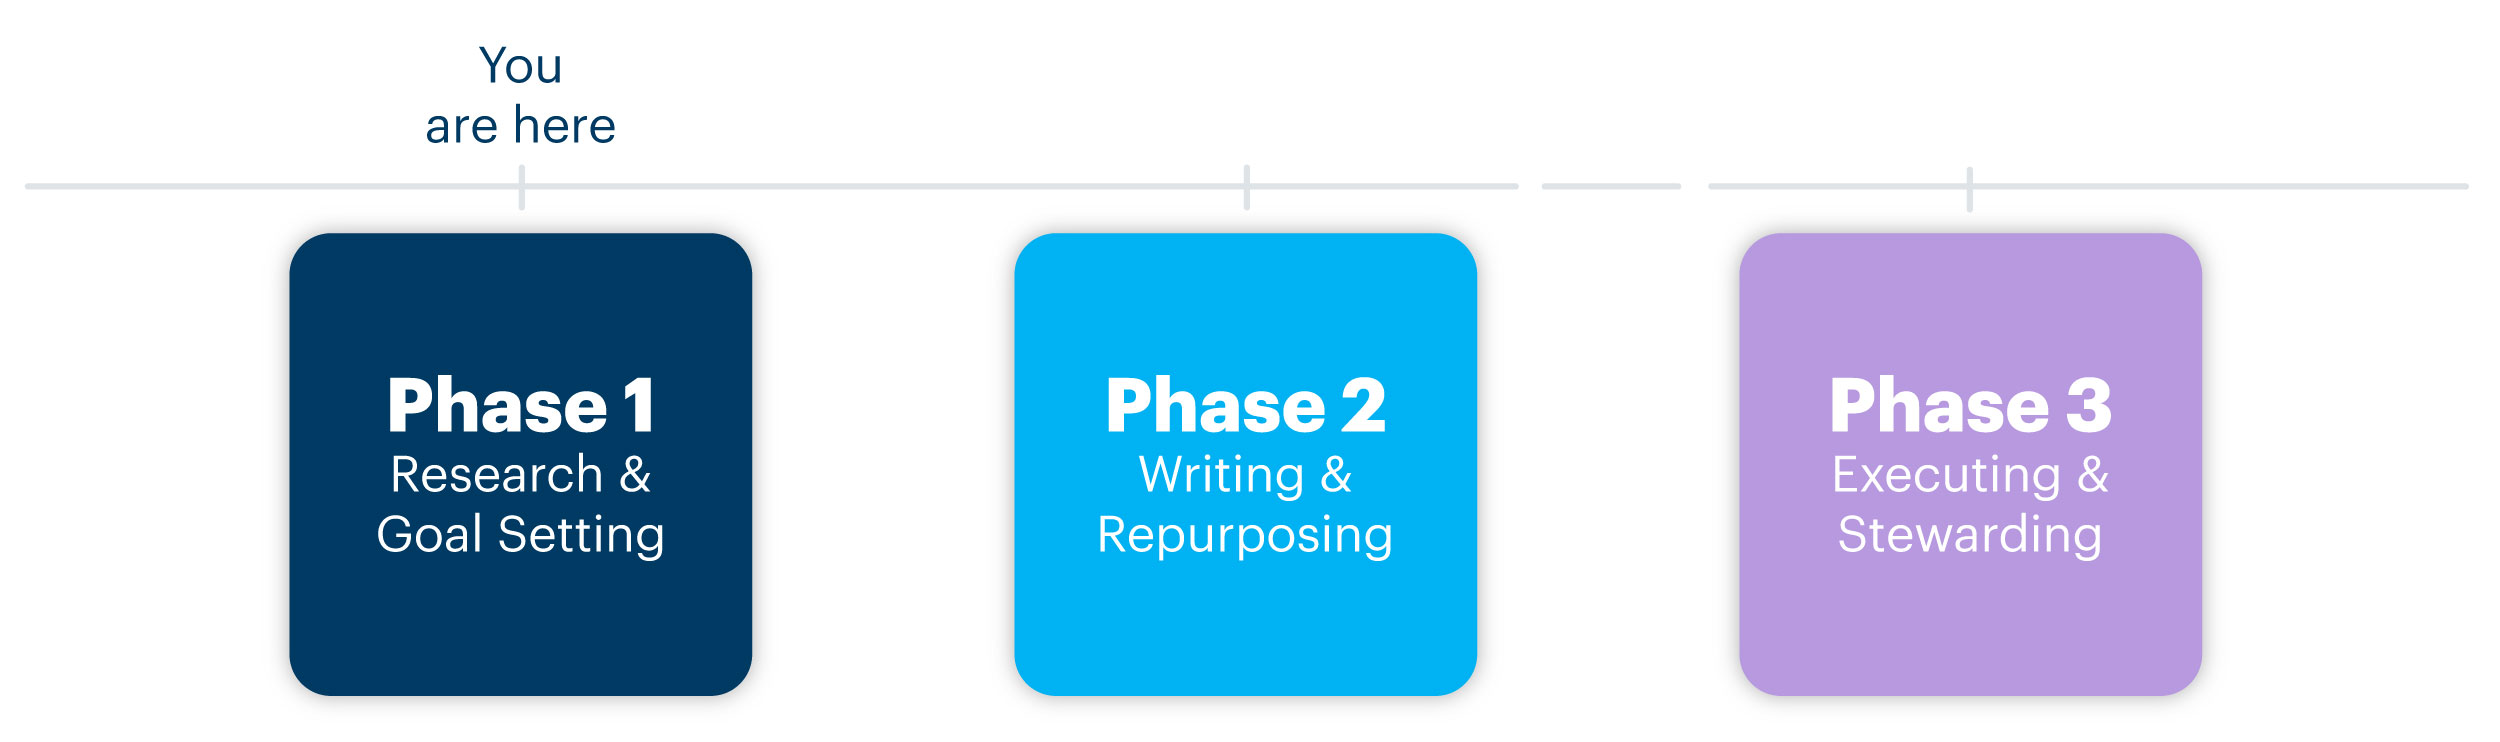 Phase 1: Research & Goal Setting; Phase 2: Writing & Repurposing; Phase 3: Executing & Stewarding